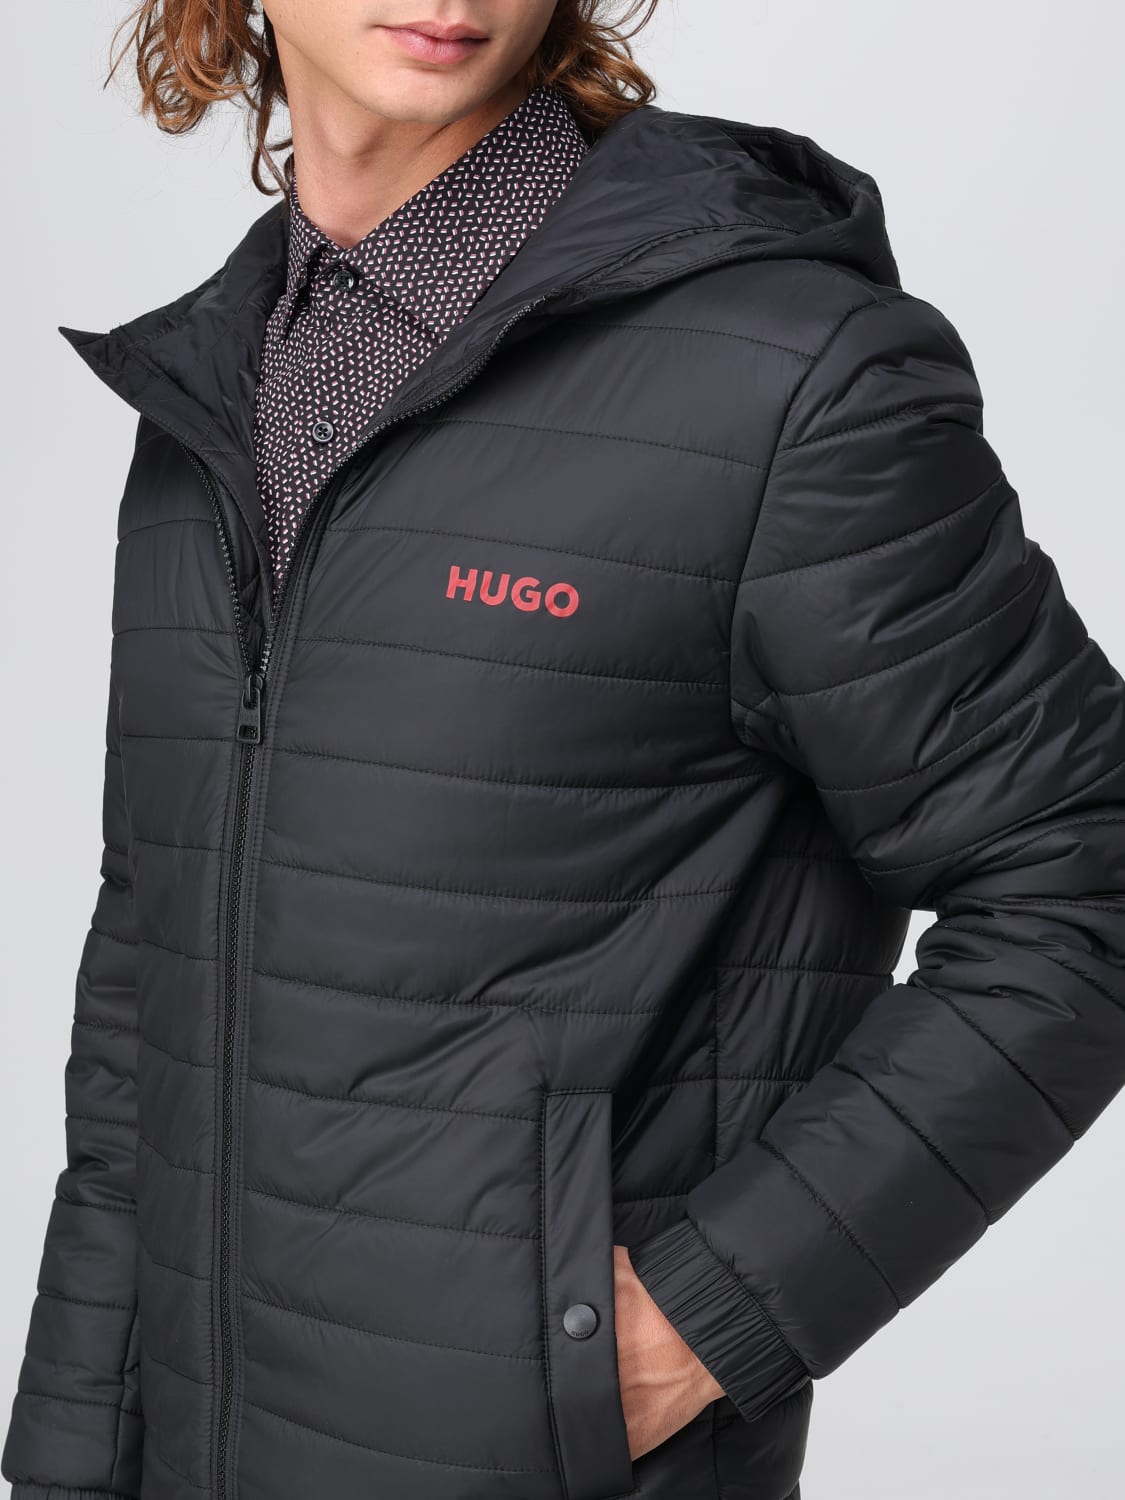 Hugo Boss Coats for Men - Vestiaire Collective